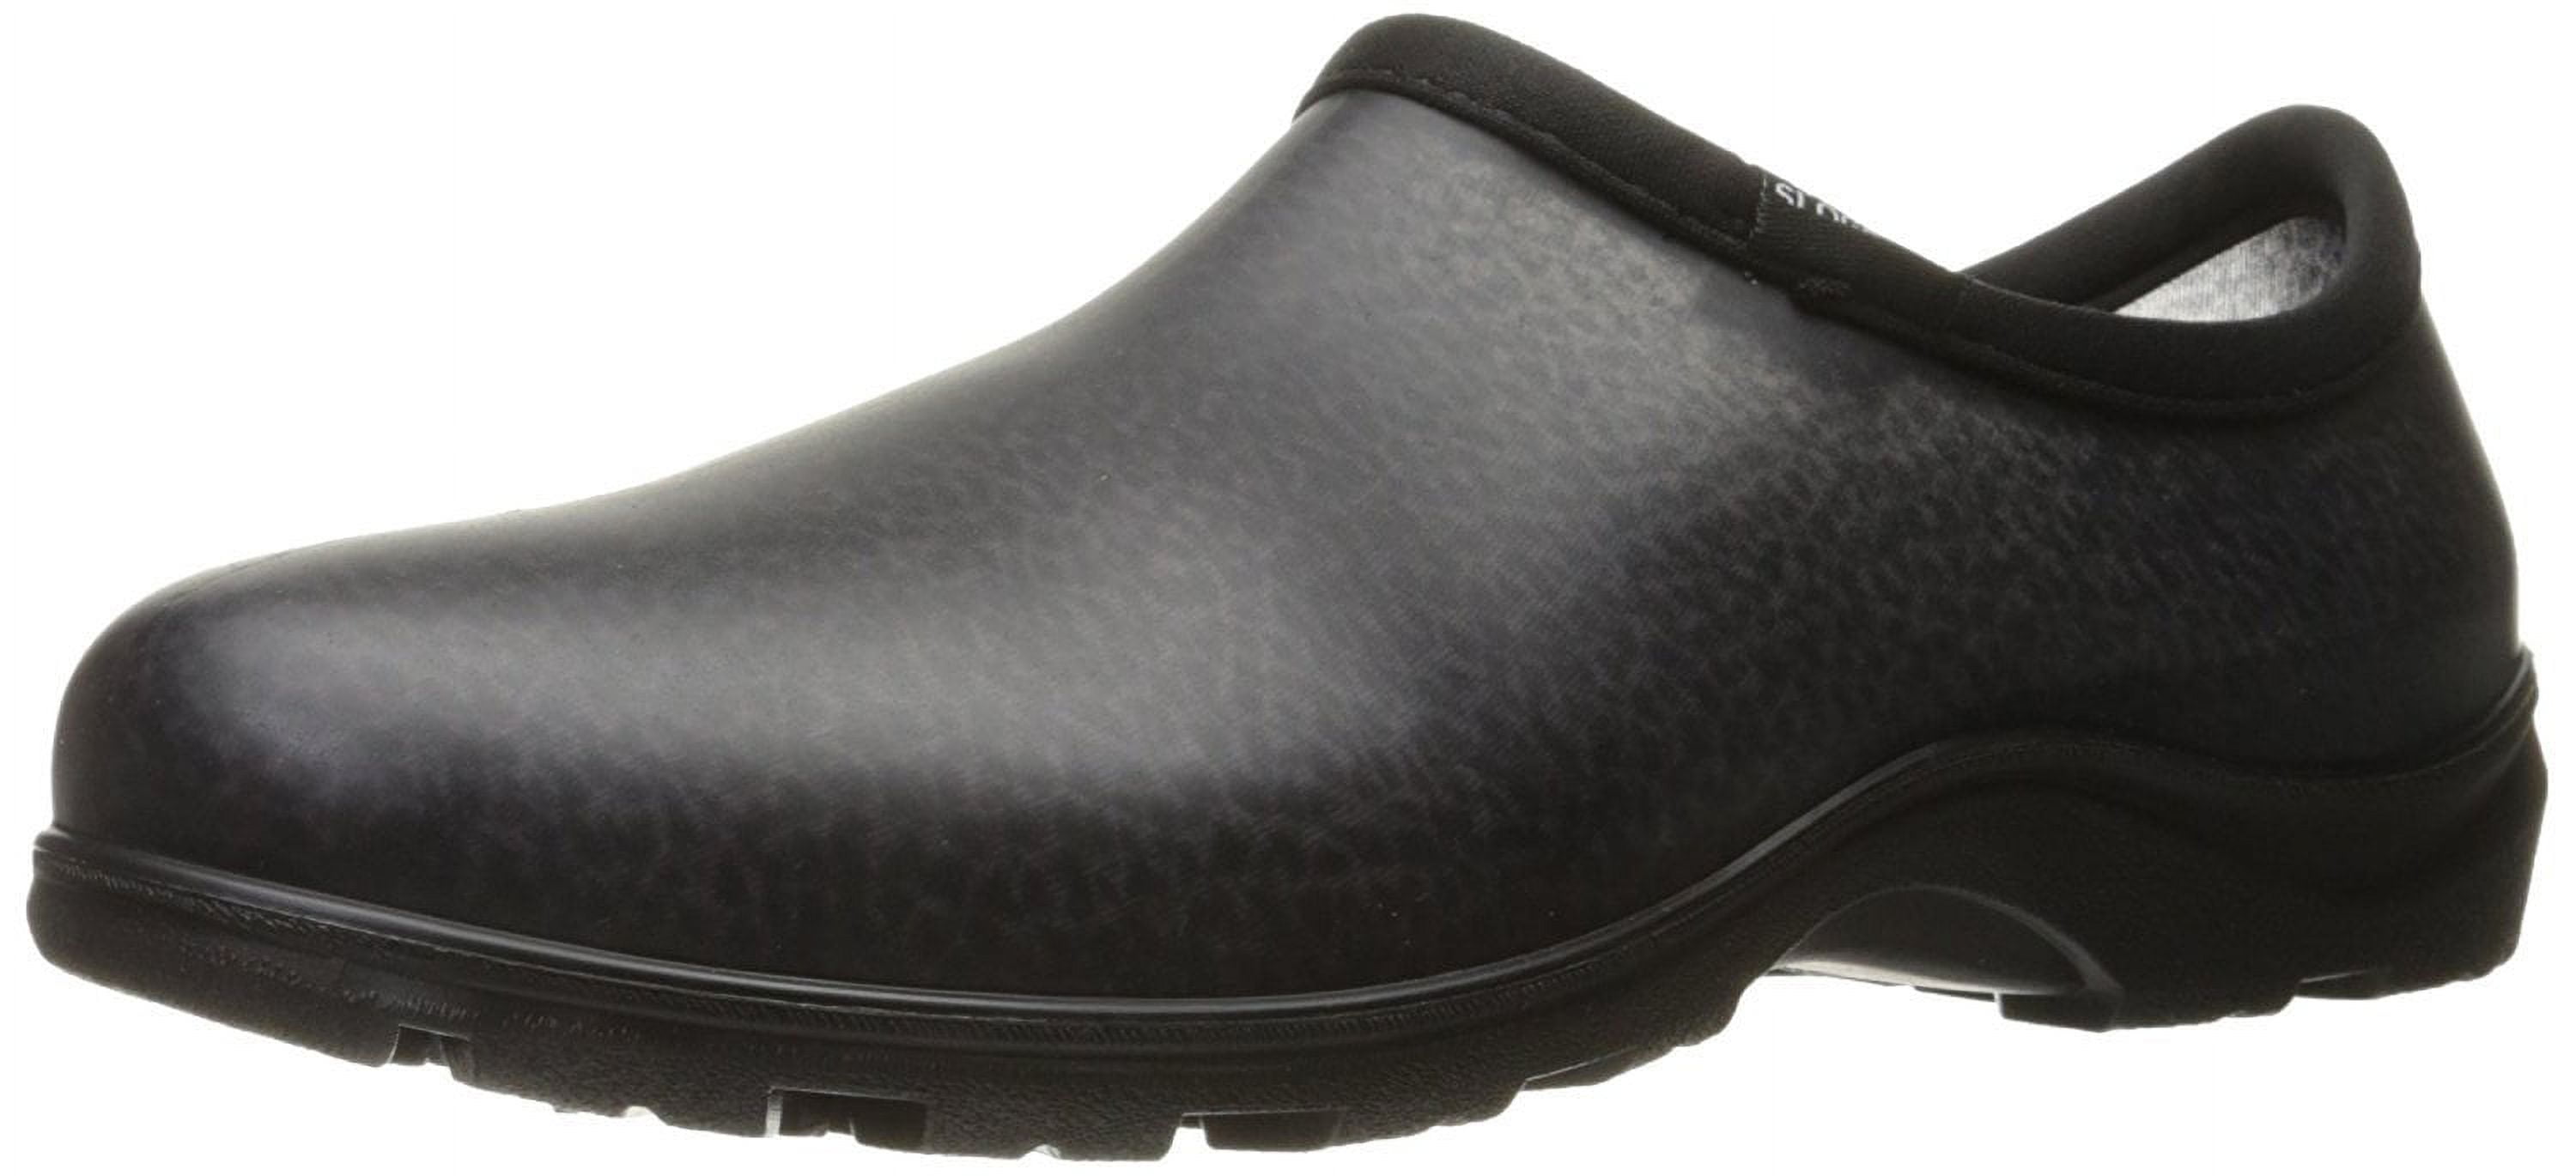 Sloggers Men Rain and Garden Shoes, Leather Black, Size 11 - Walmart.com